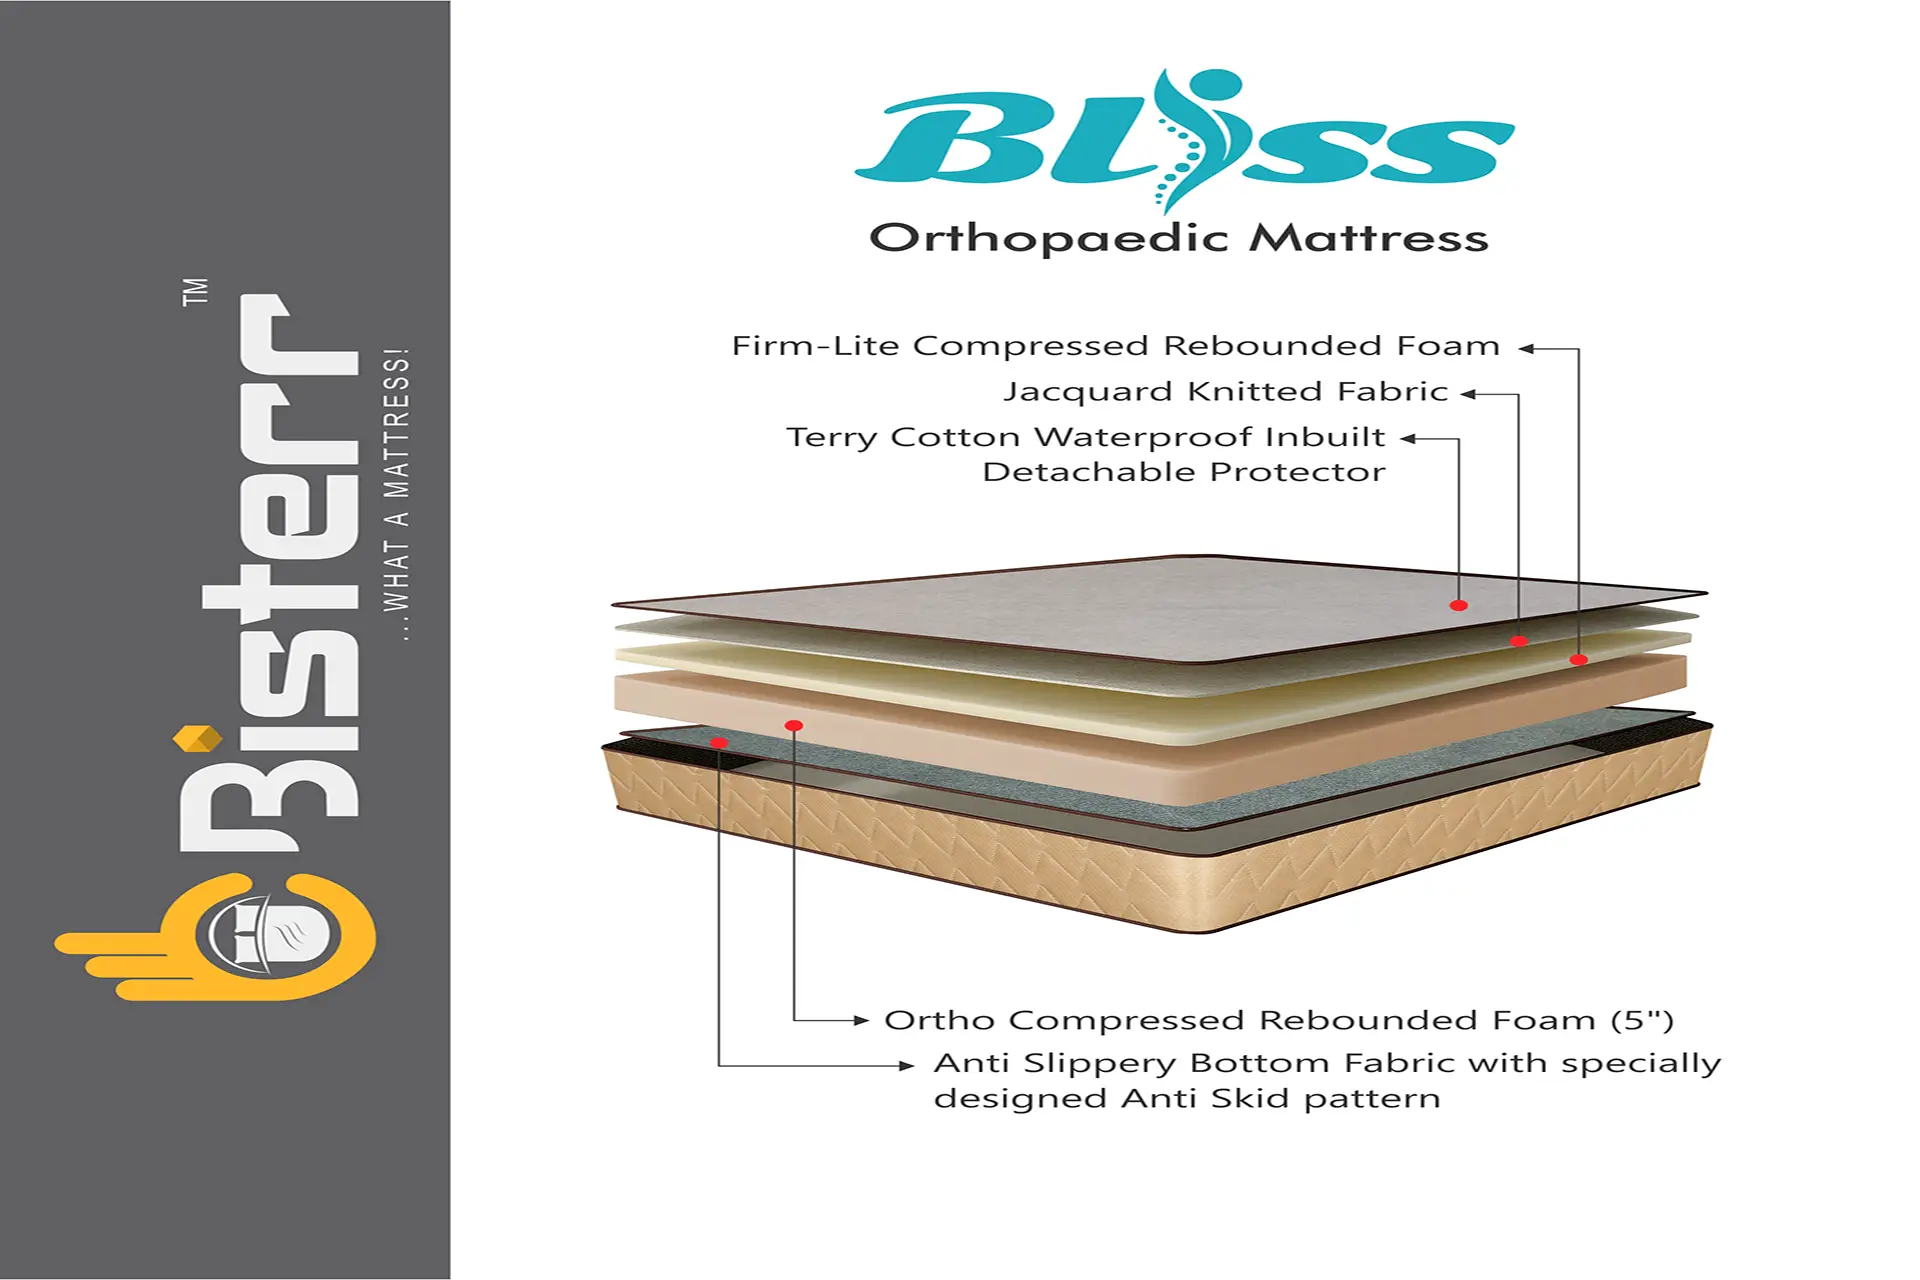 BLISS Orthopaedic Mattress